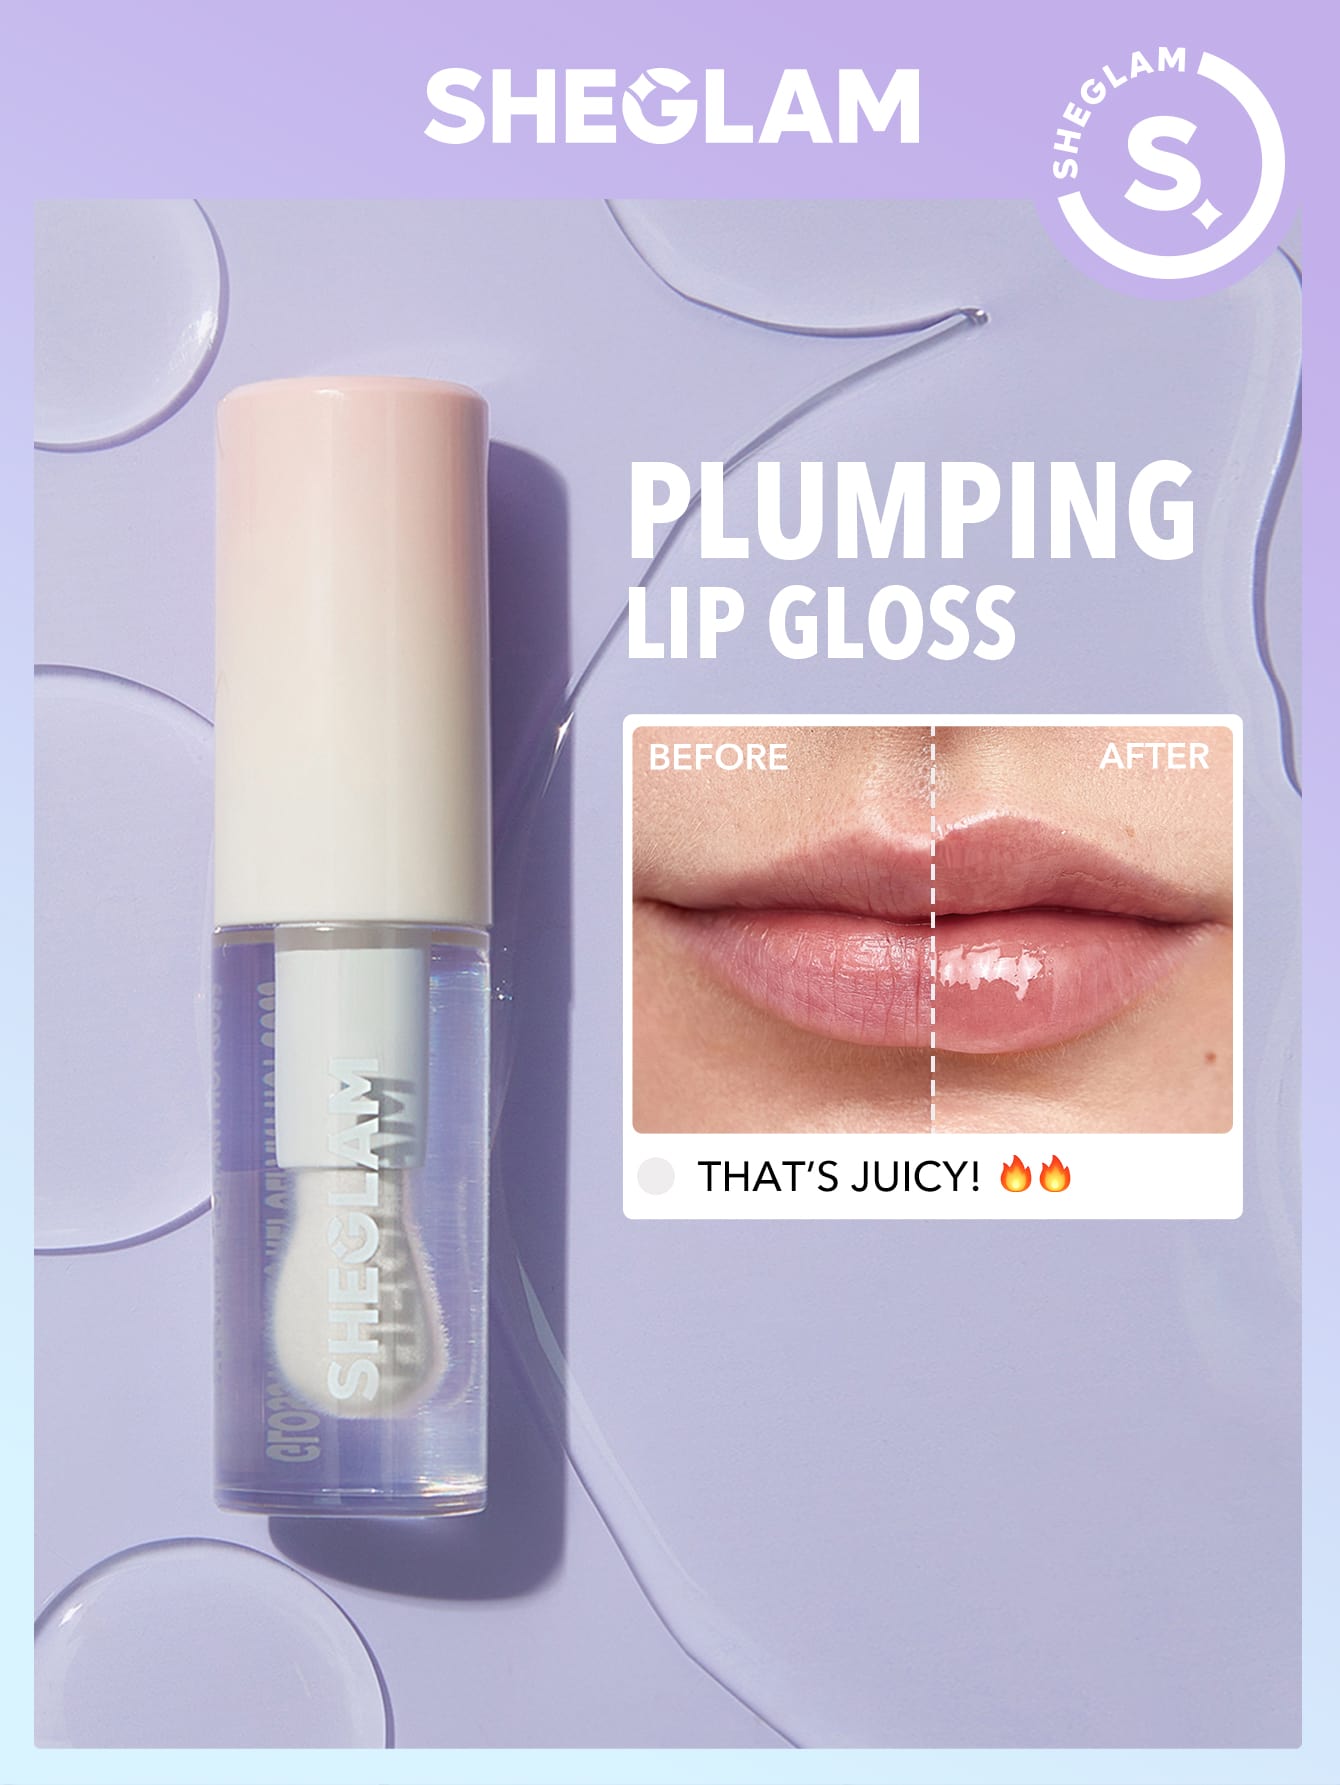 SHEGLAM Hot Goss Plumping Lip Gloss That s Juicy